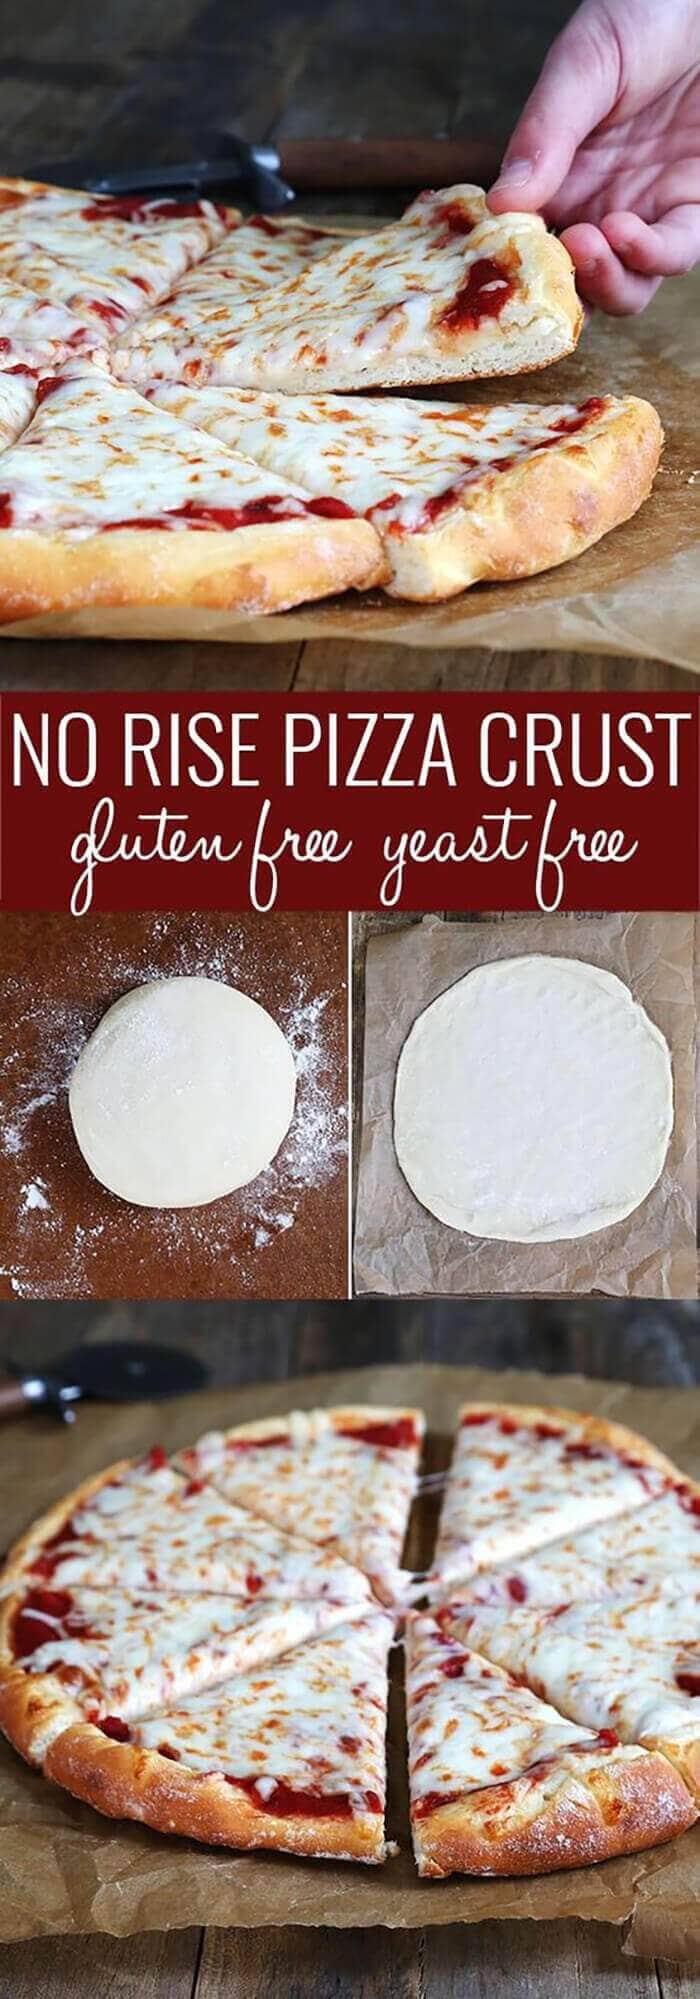 Yeast Free Gluten Free Pizza – Two Ways